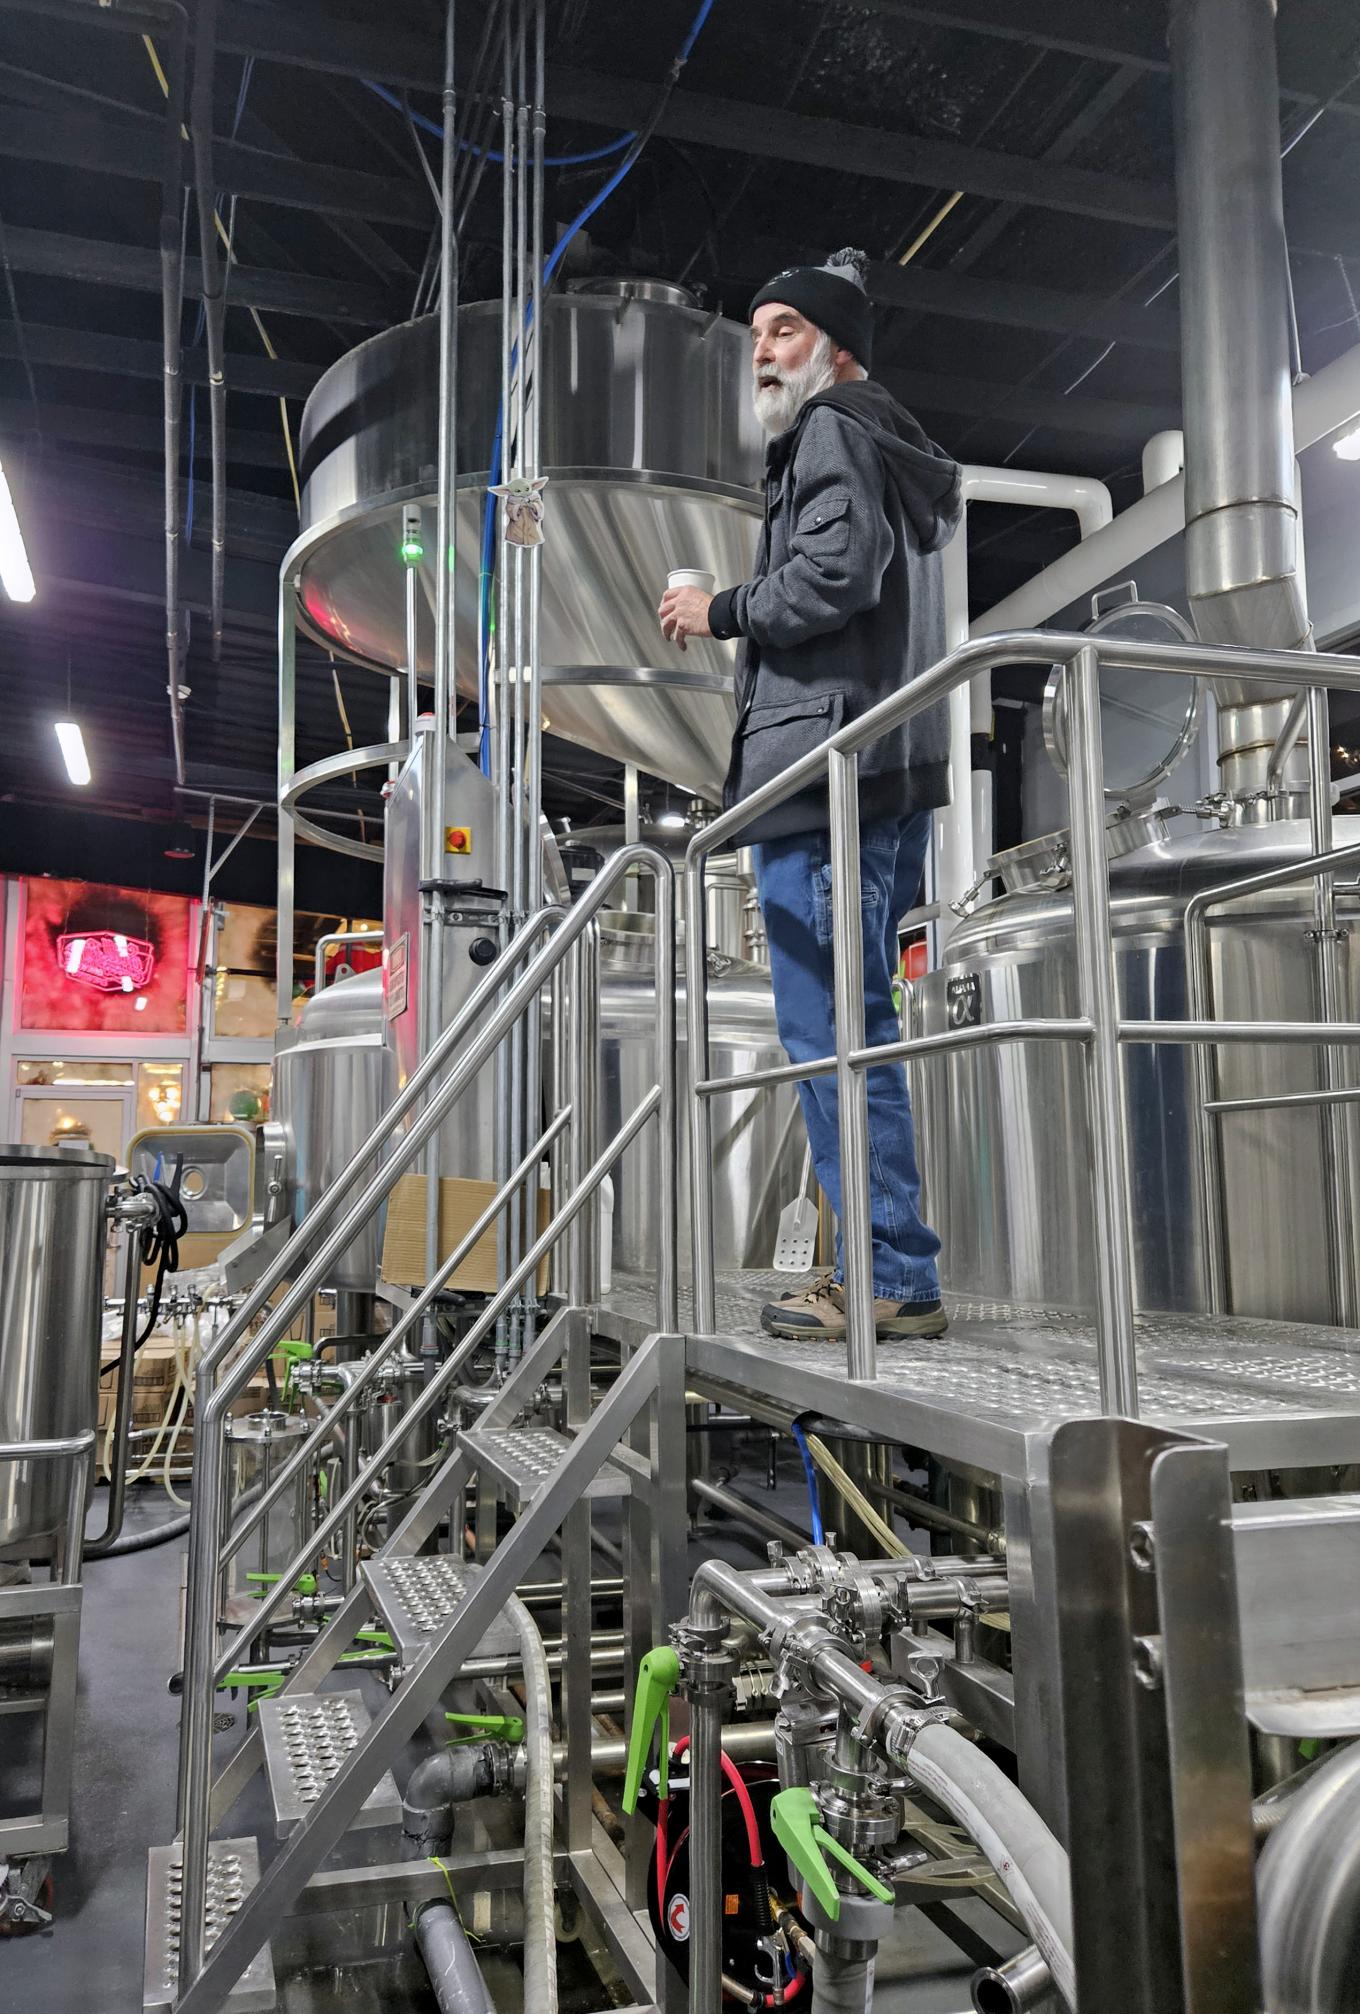 StillFire Brewing owner, Phil Farrell on the catwalk between the fermentation vessels.